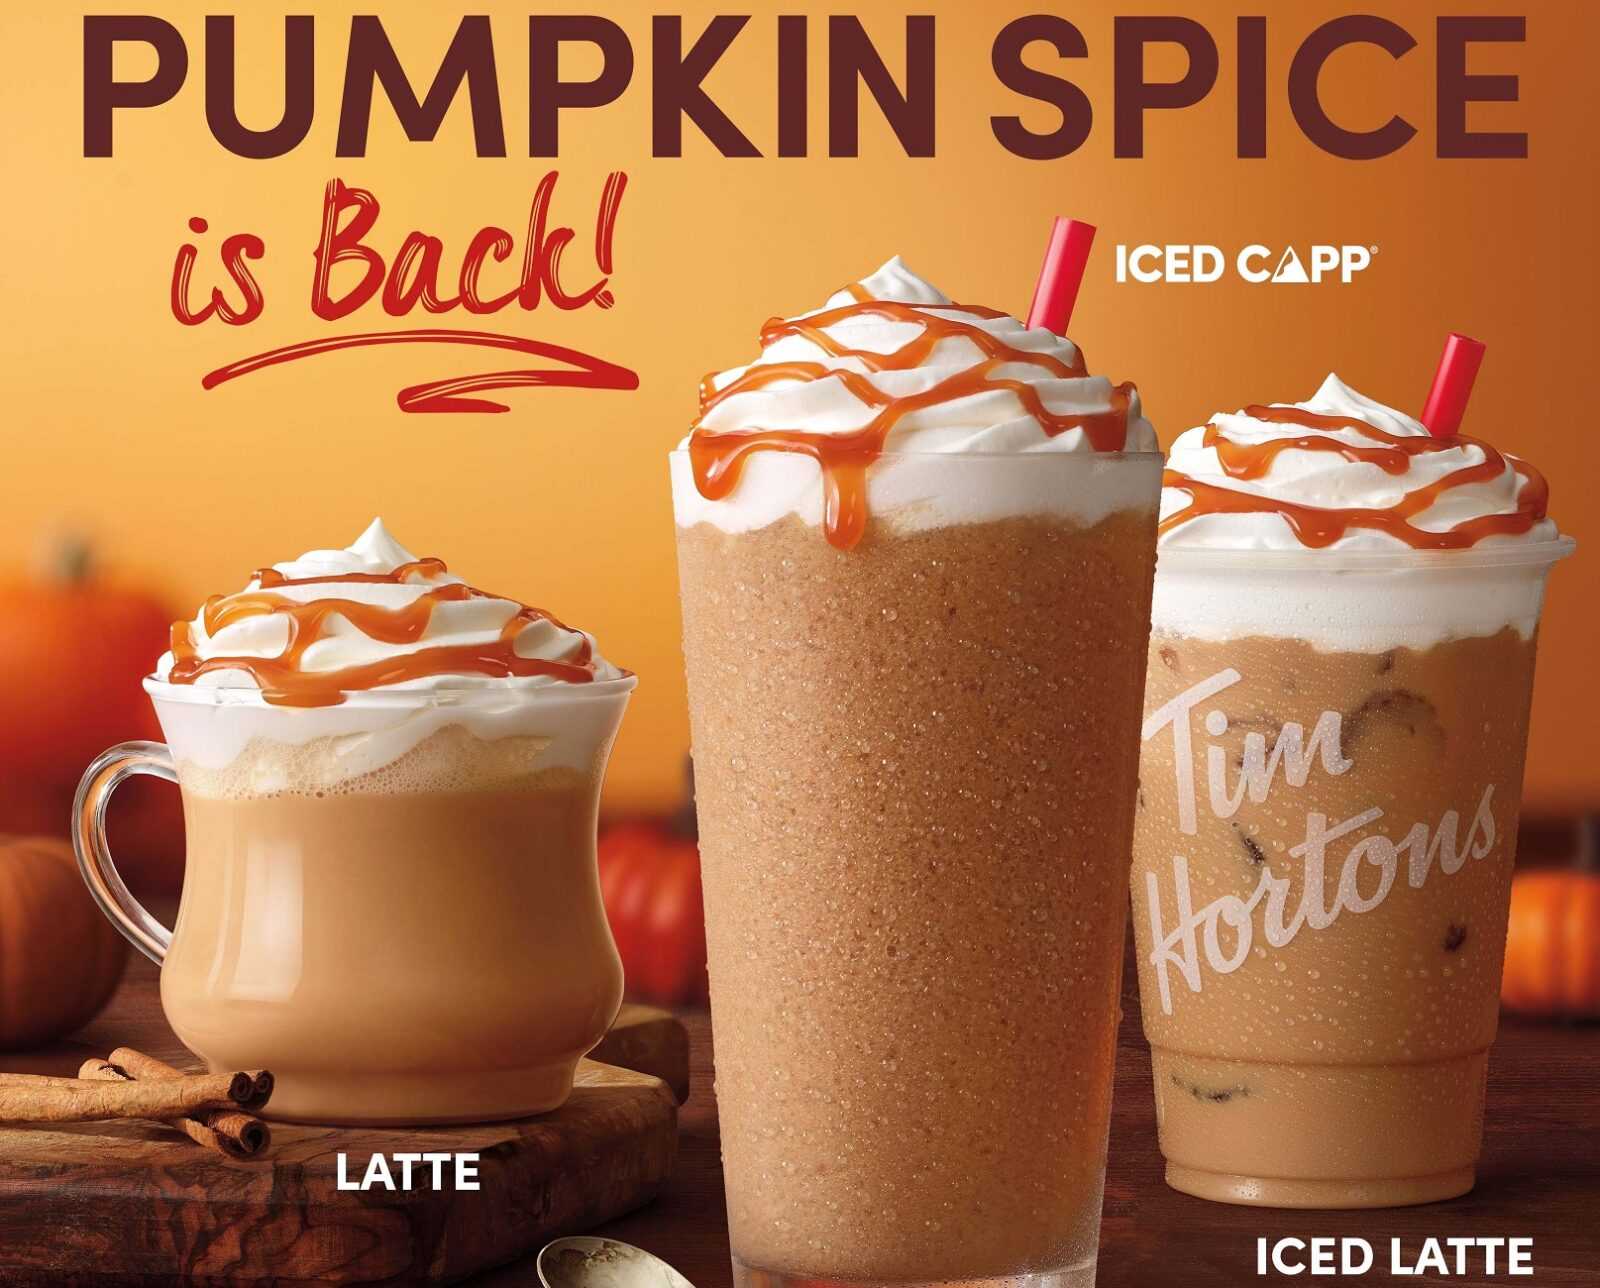 Tim Hortons Us Announces Return Of Its Pumpkin Spice Beverages